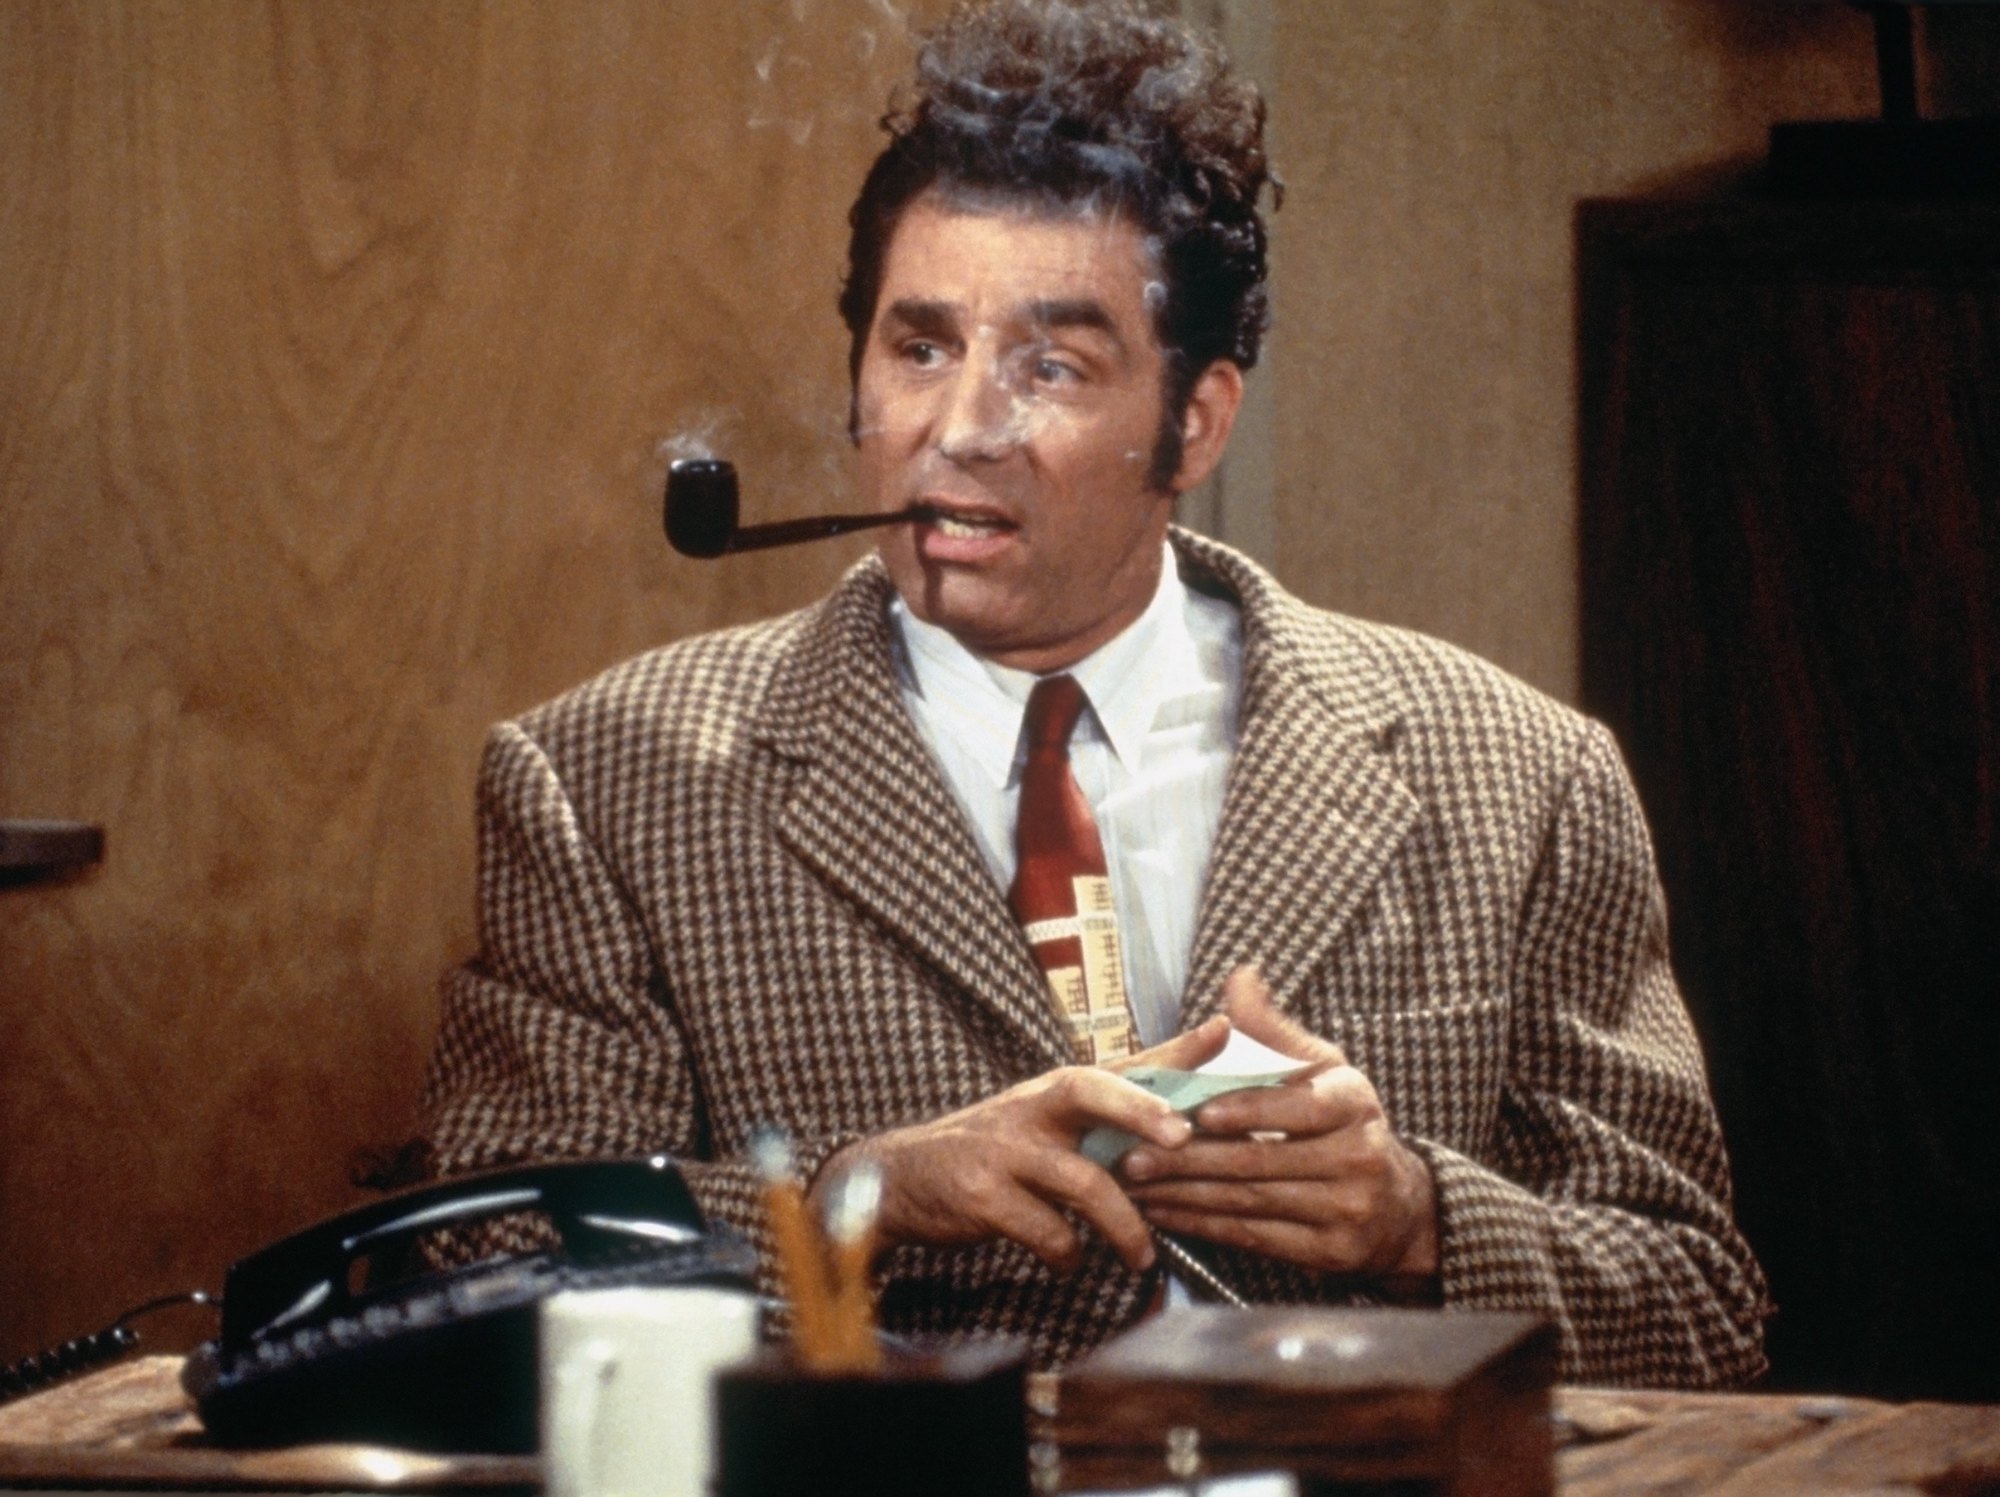 Michael Richards smoking a pipe on 'Seinfeld'